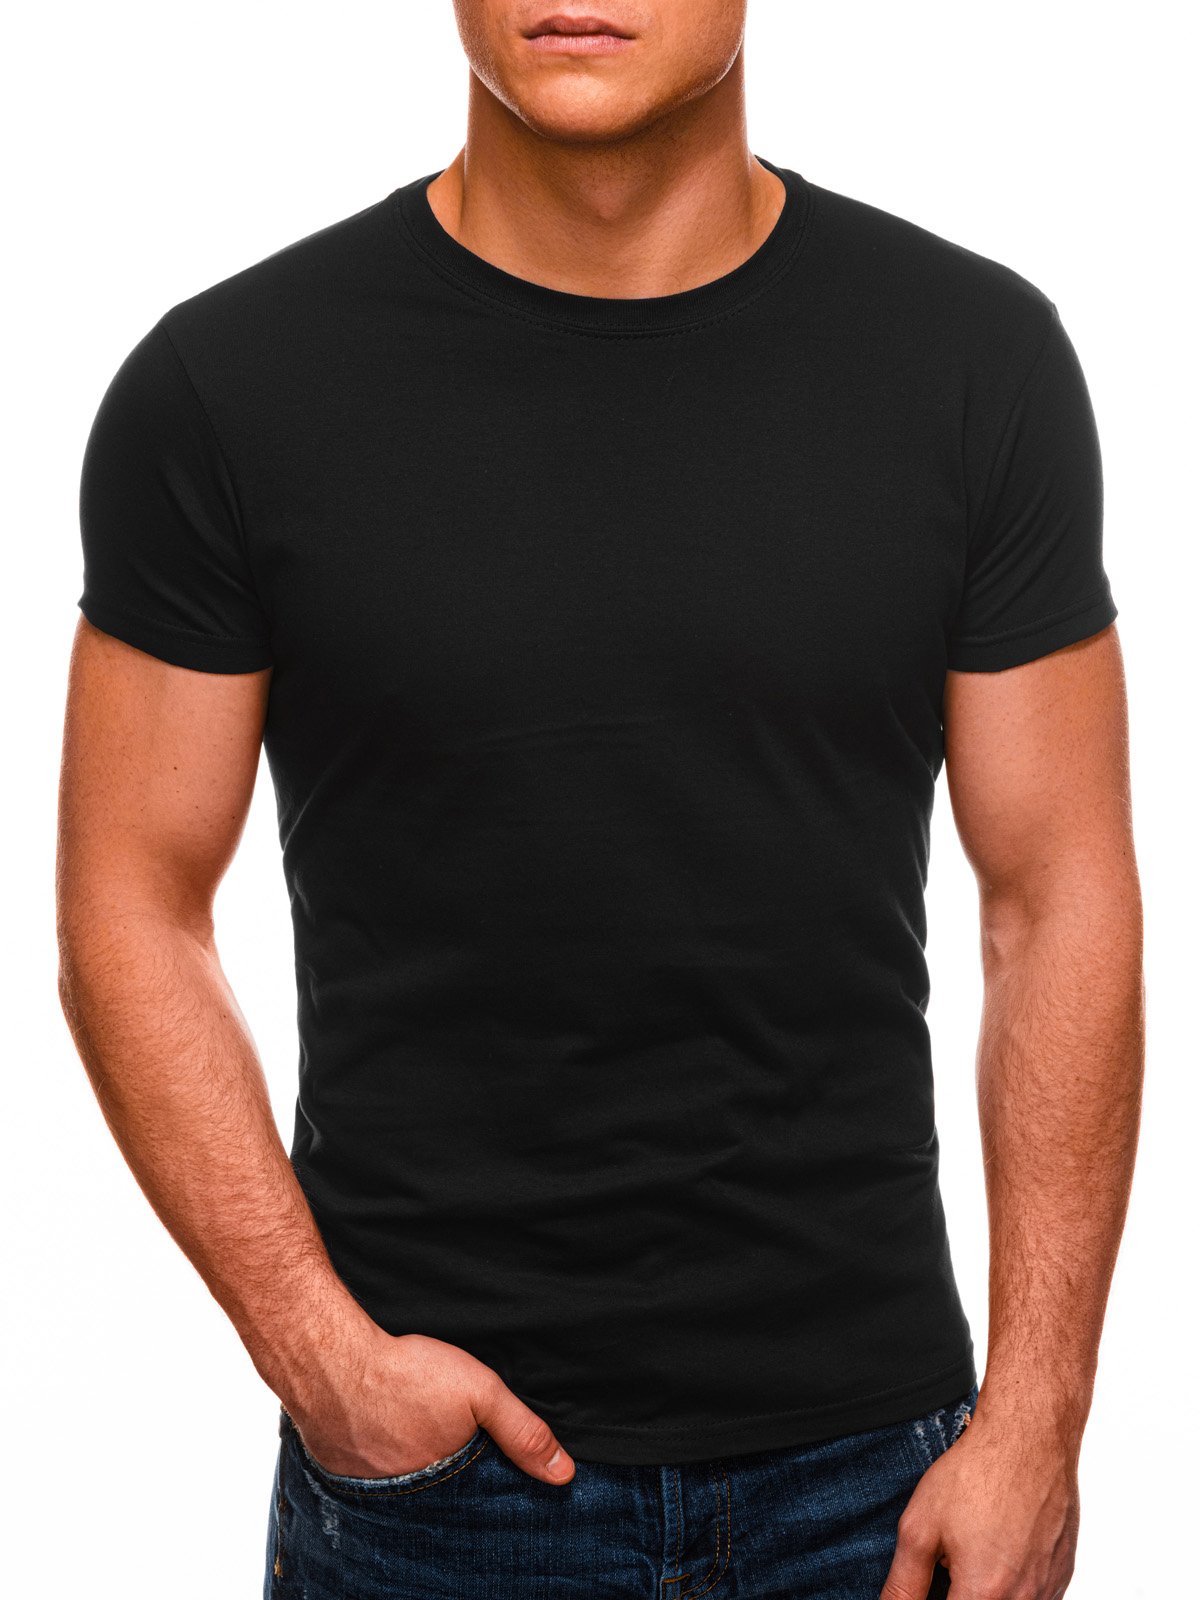 Men's plain t-shirt S970 - black | MODONE wholesale - Clothing For Men